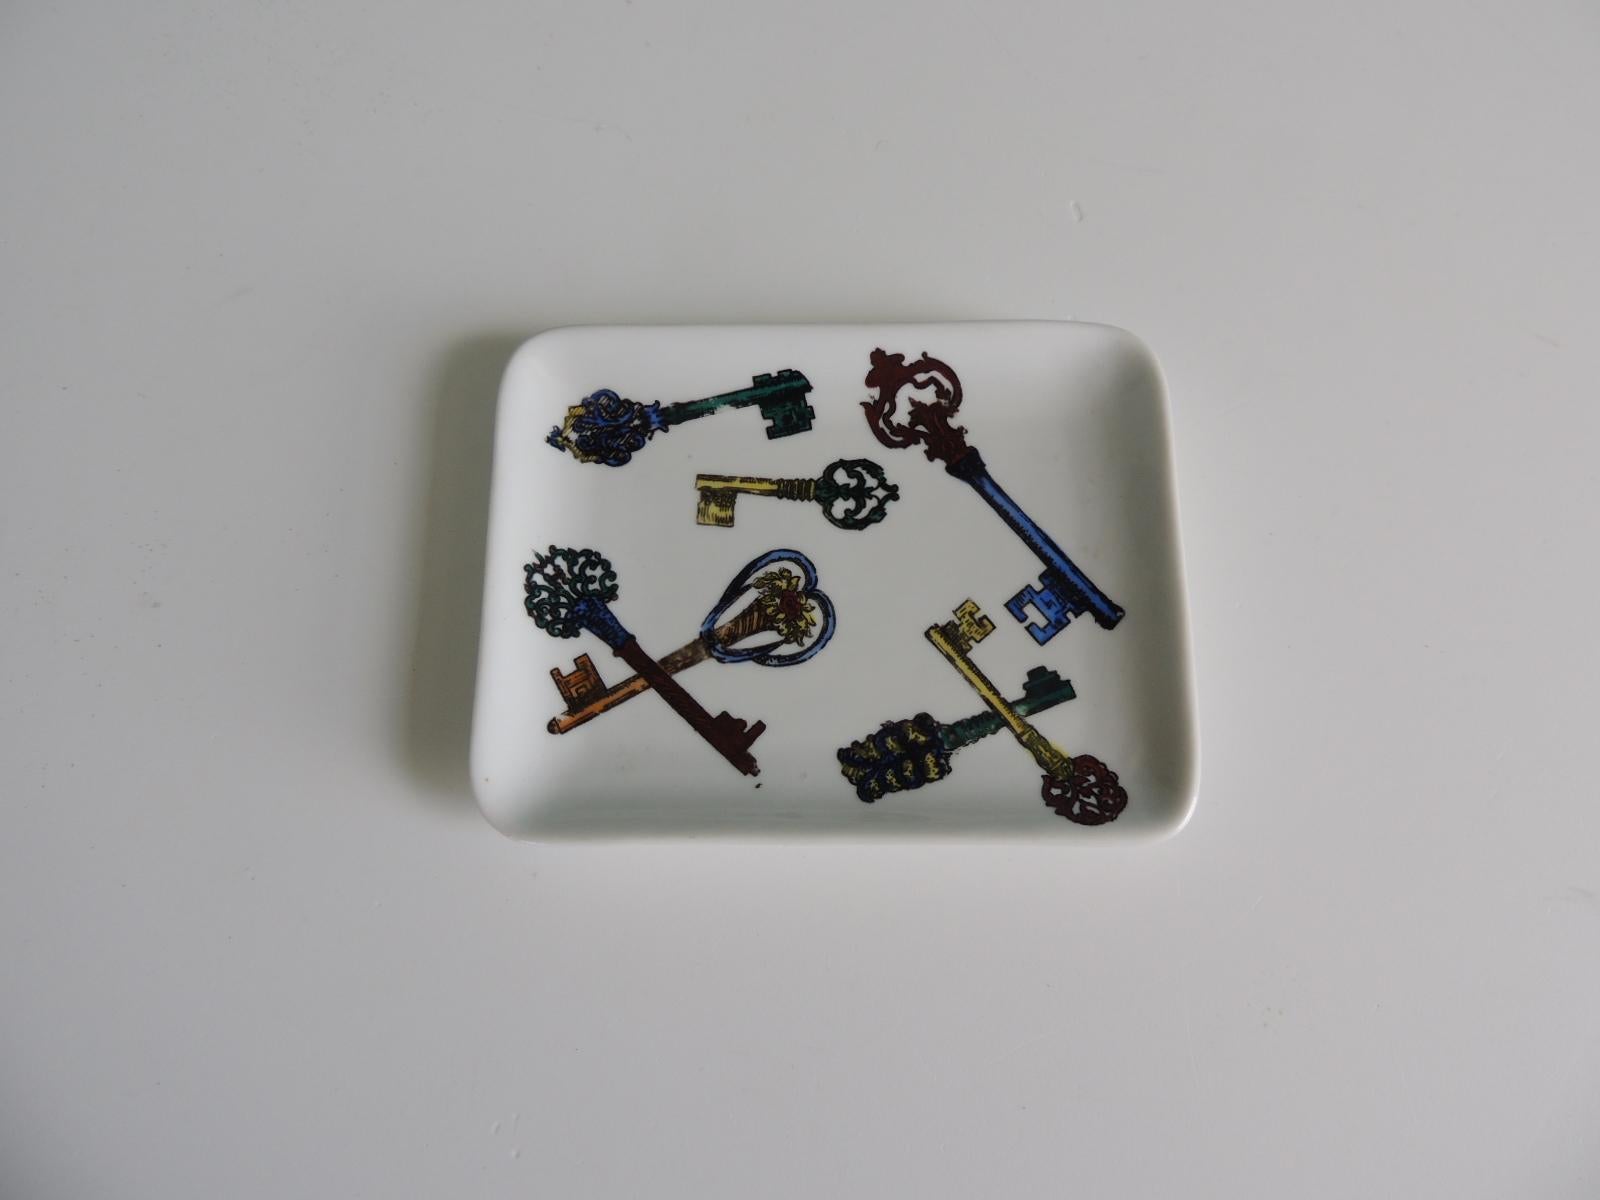 Keys ceramic trinket dish.
Size: 5.5